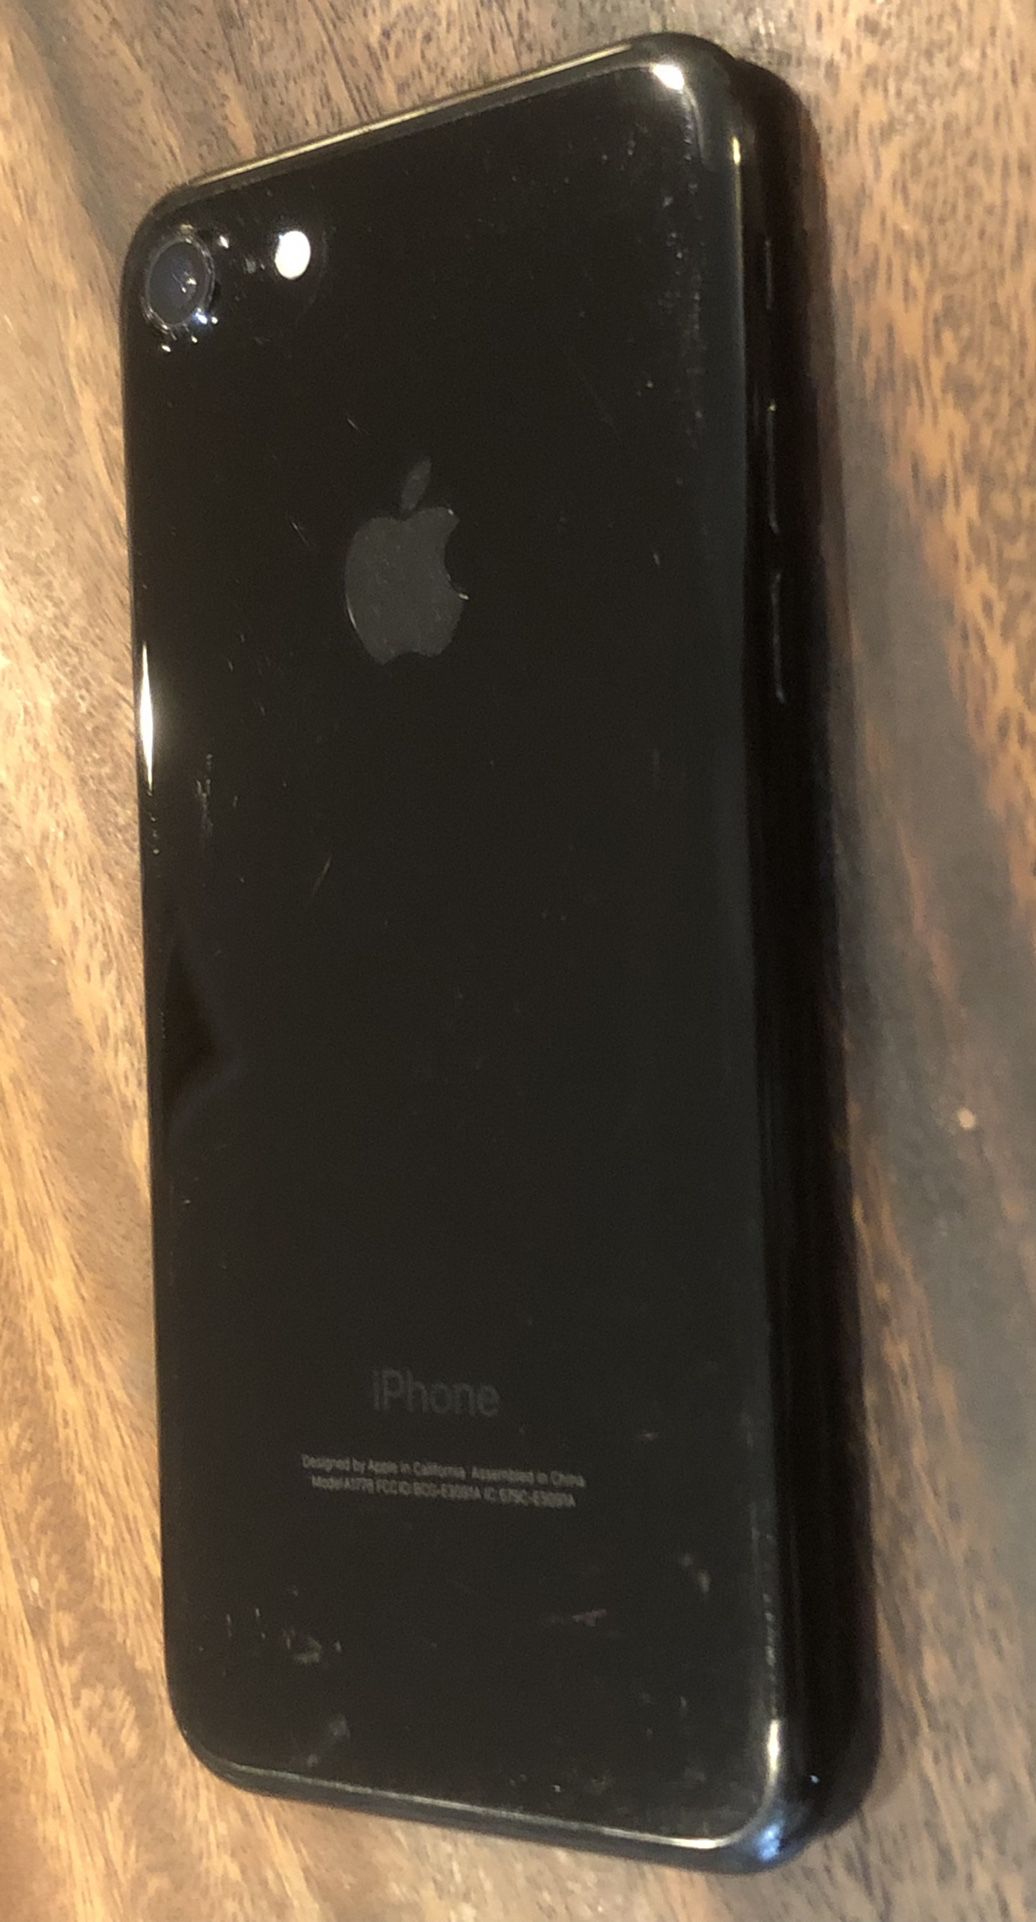  iPhone 7 Factory Unlocked 128GB Jet Black!